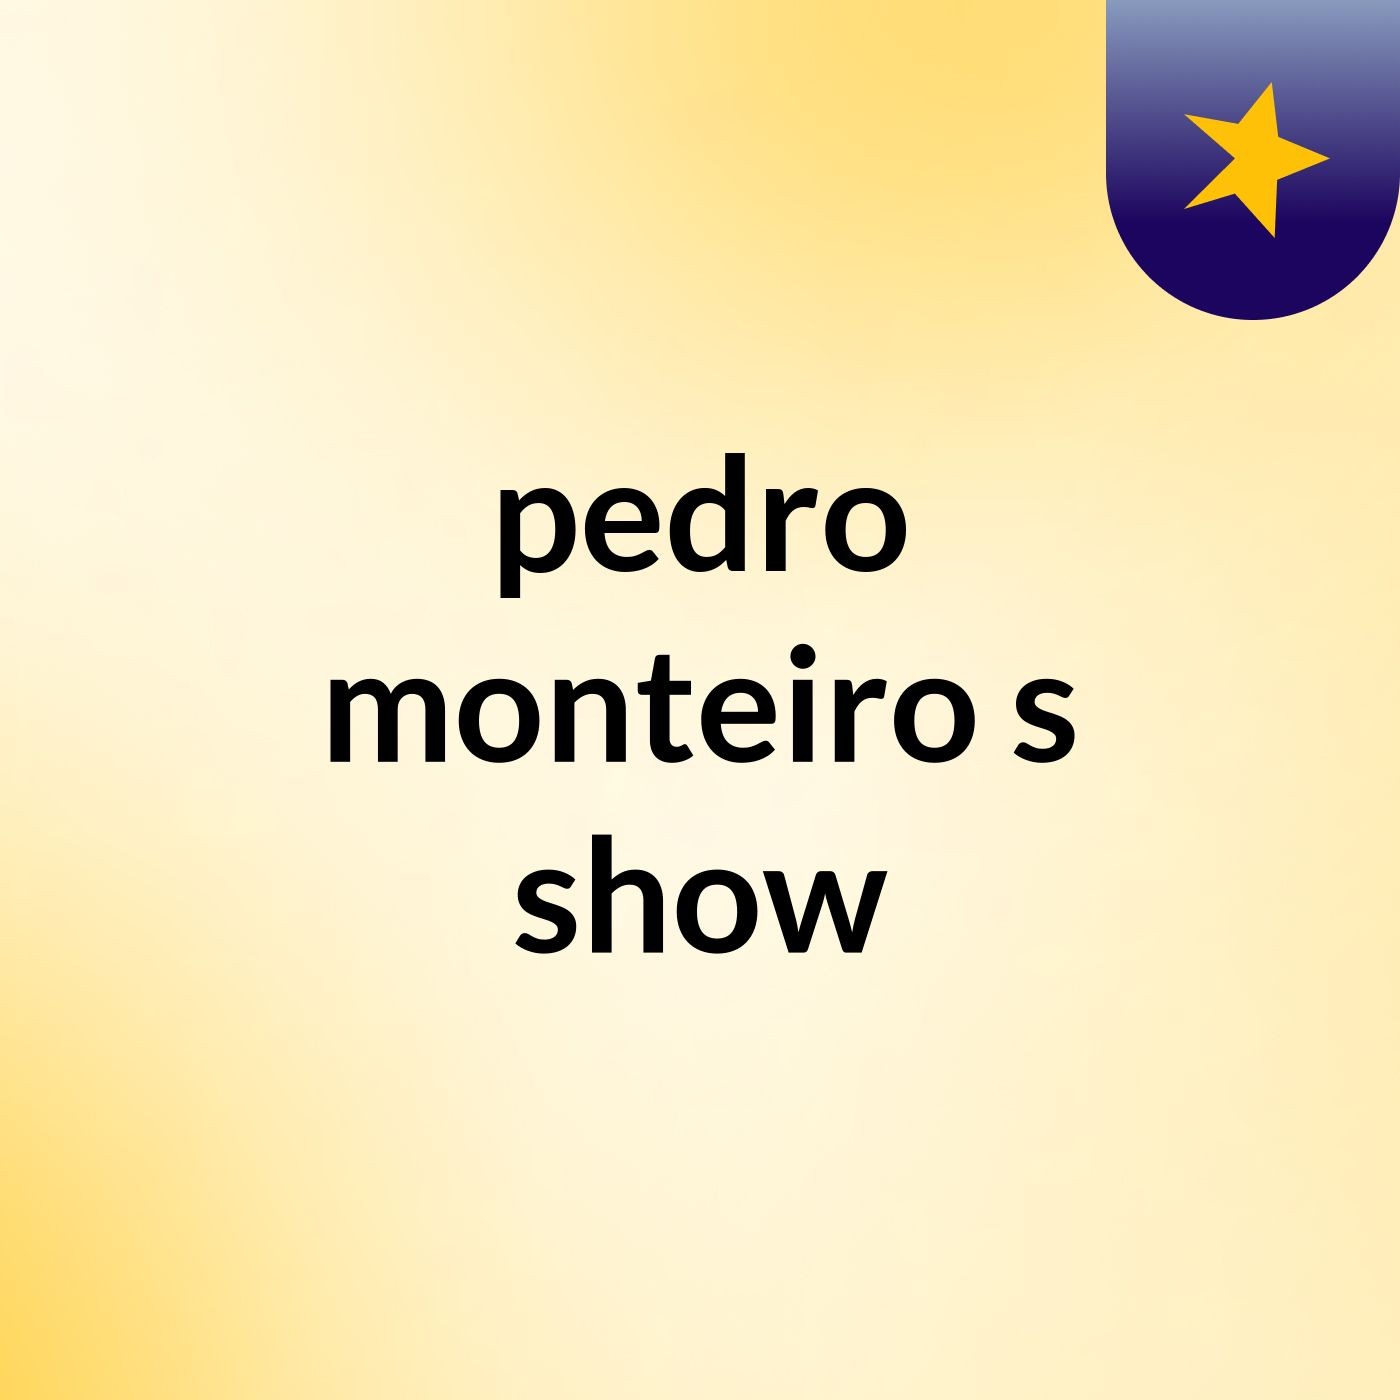 pedro monteiro's show